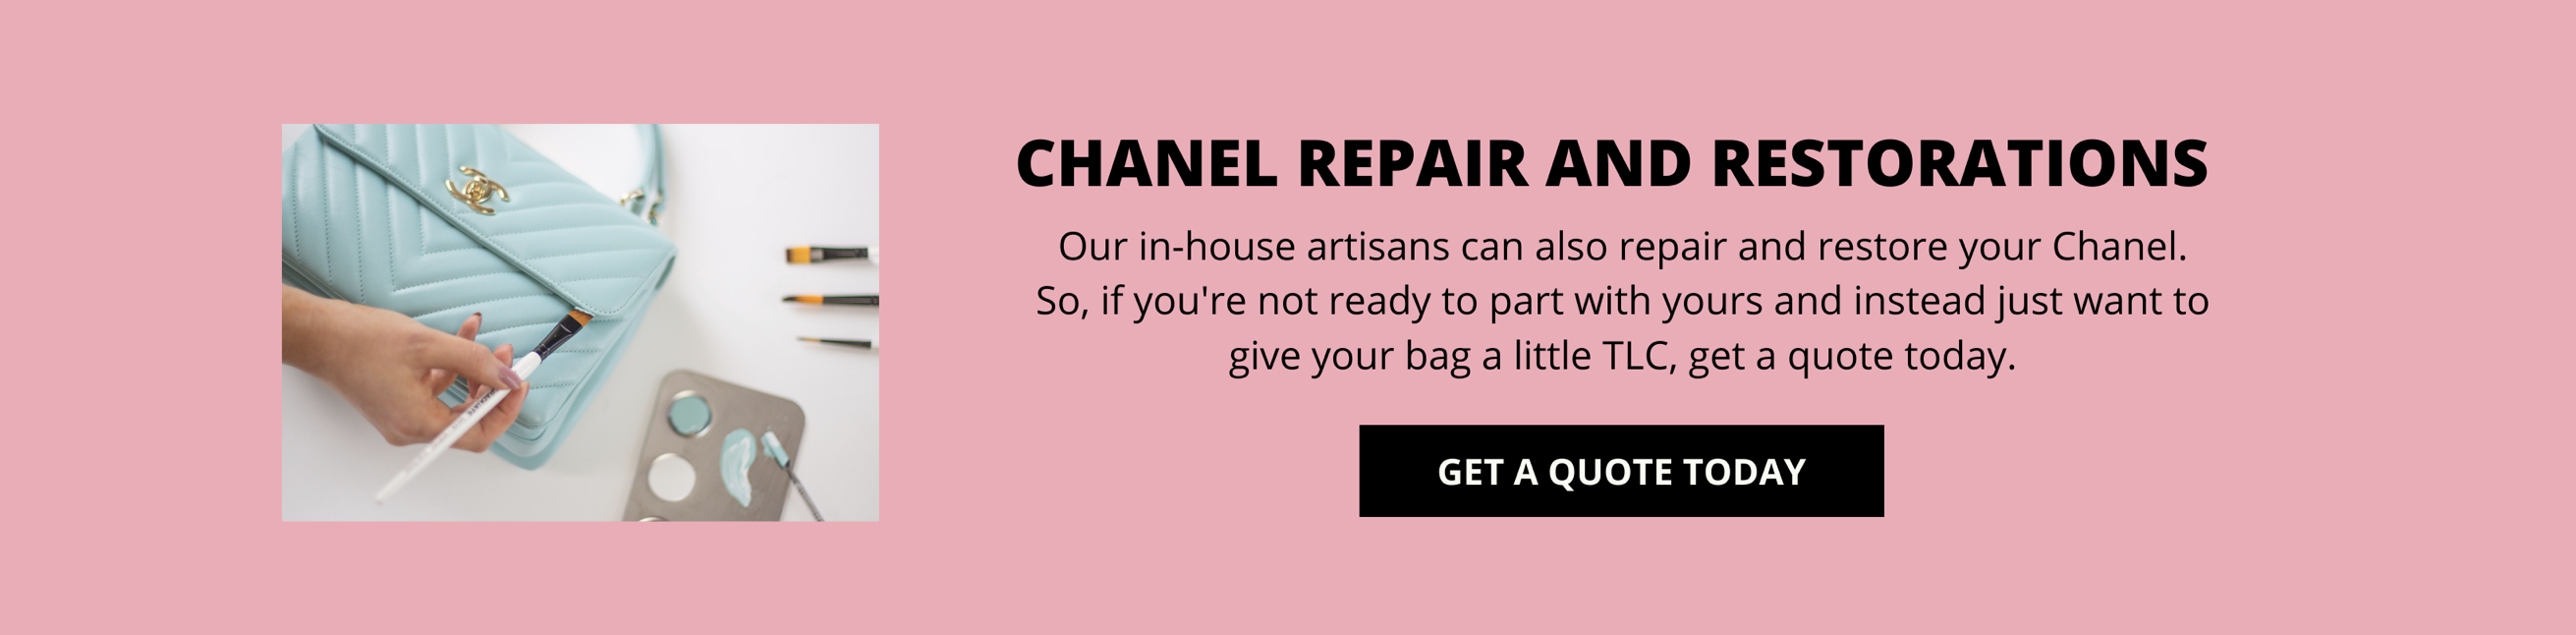 Restore your Chanel bag at The Handbag Clinic